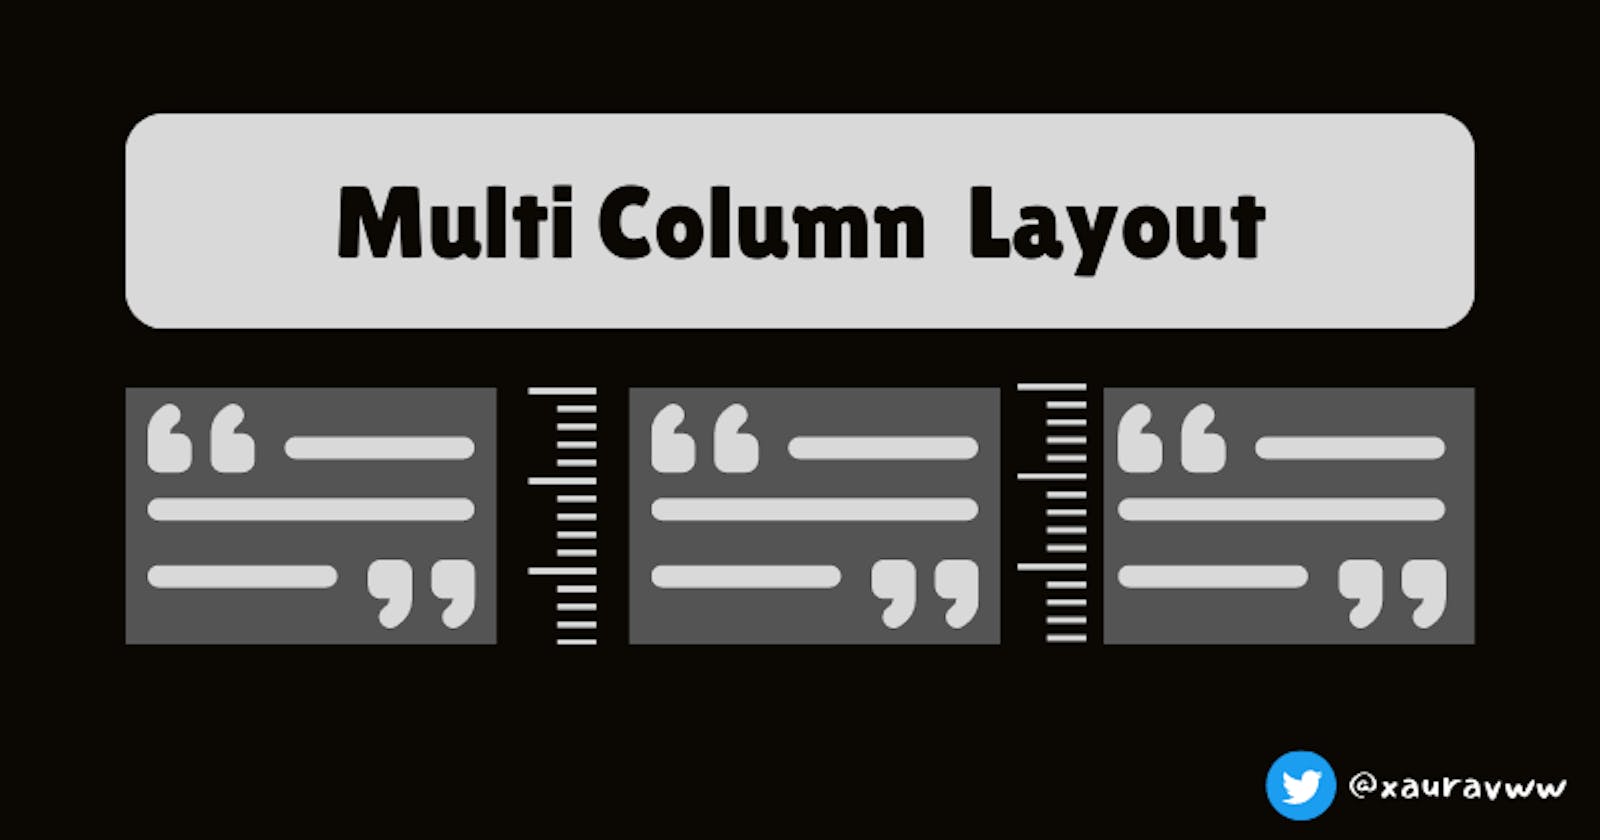 Multi Column Layout in CSS